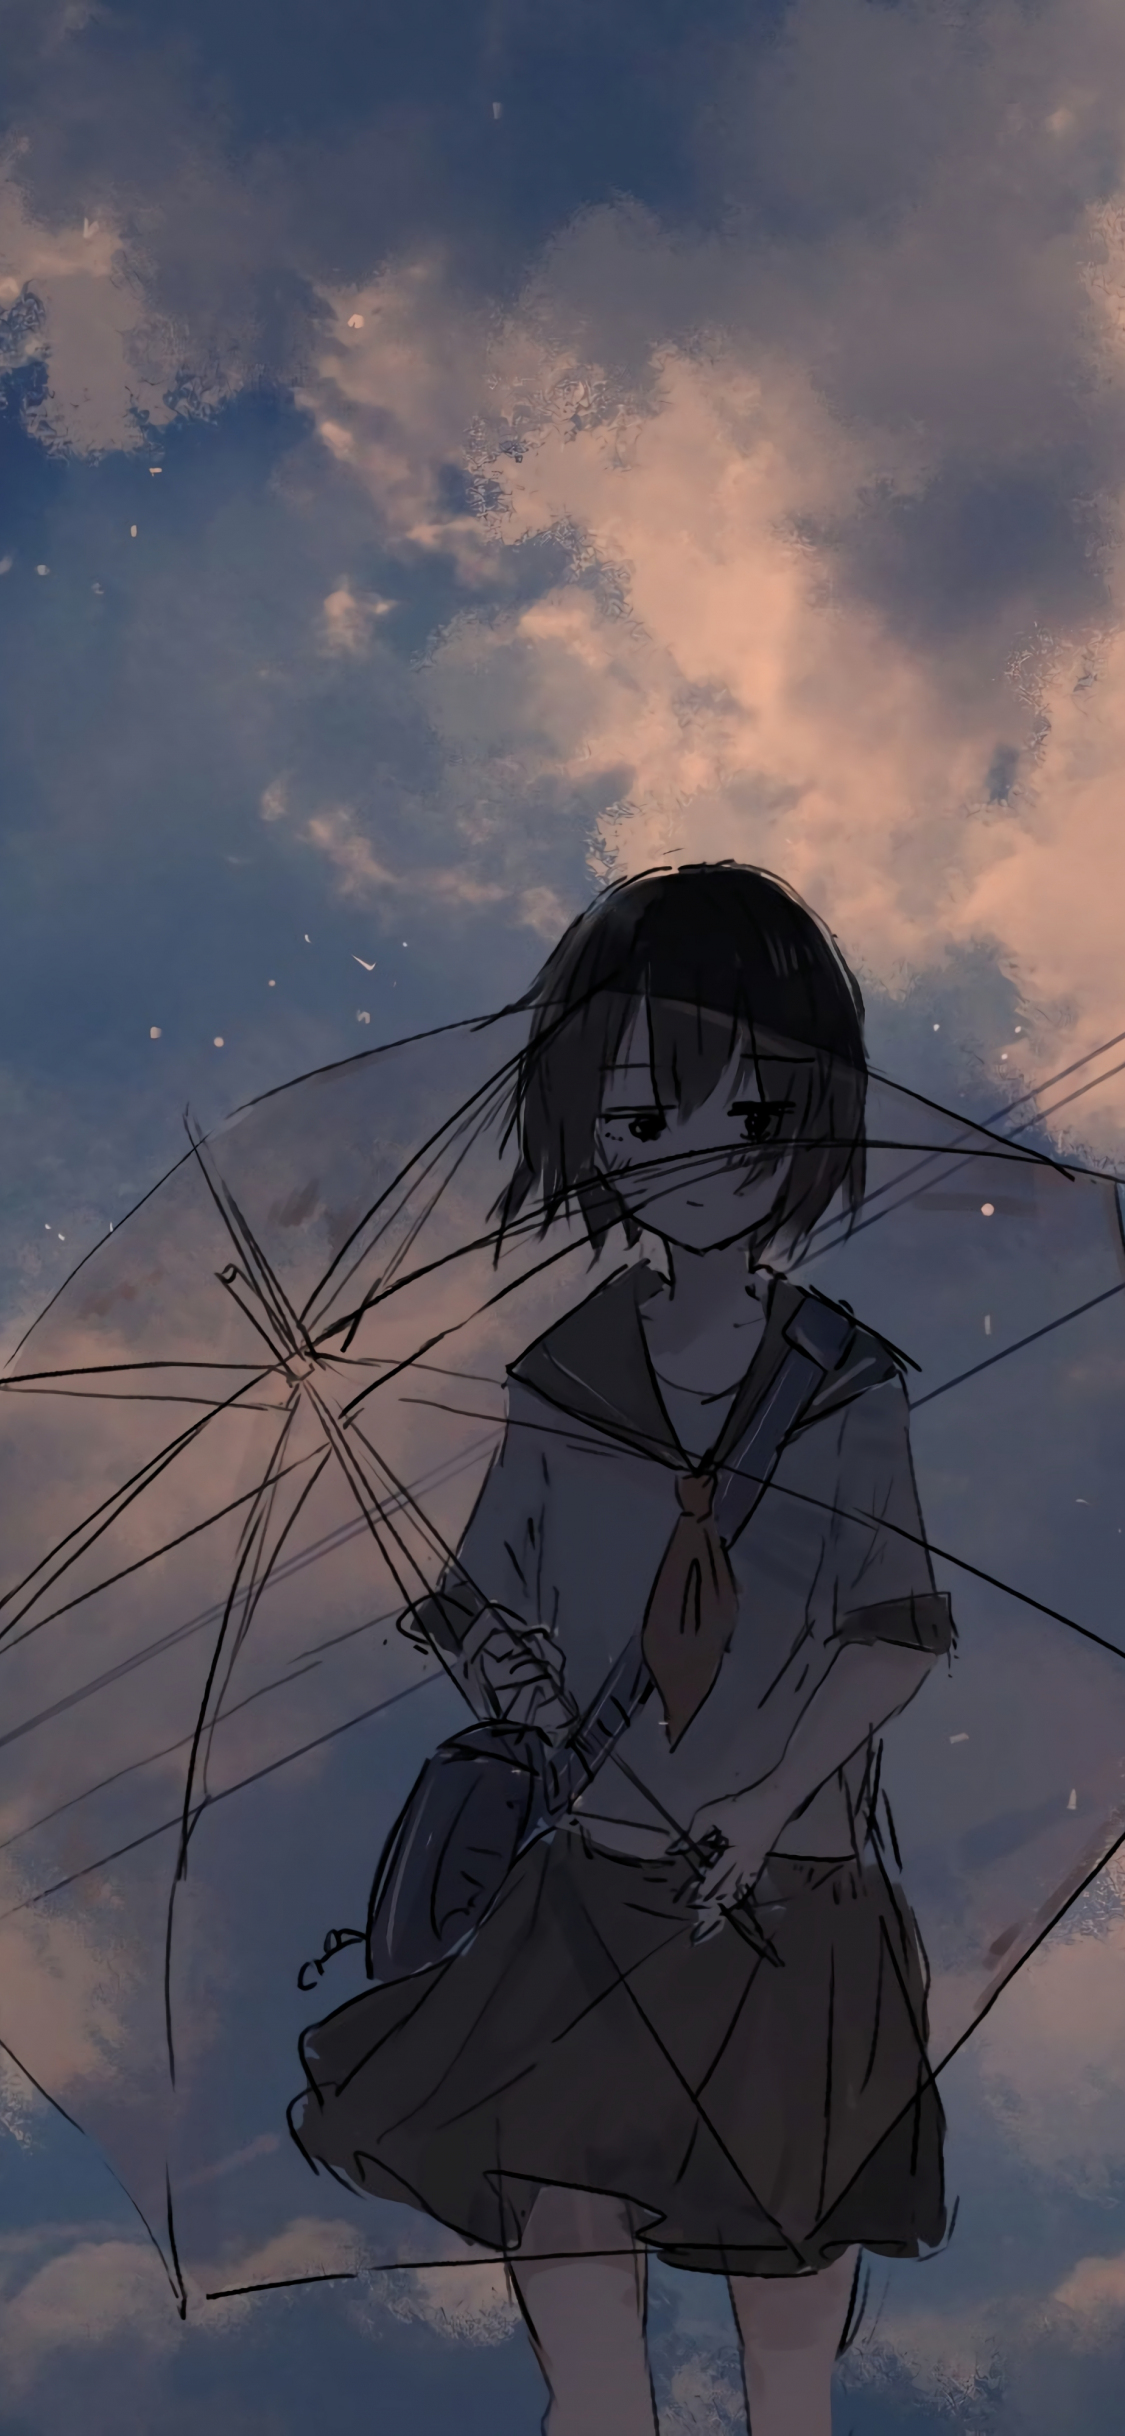 Anime Girl And Umbrella Art Wallpaper iPhone